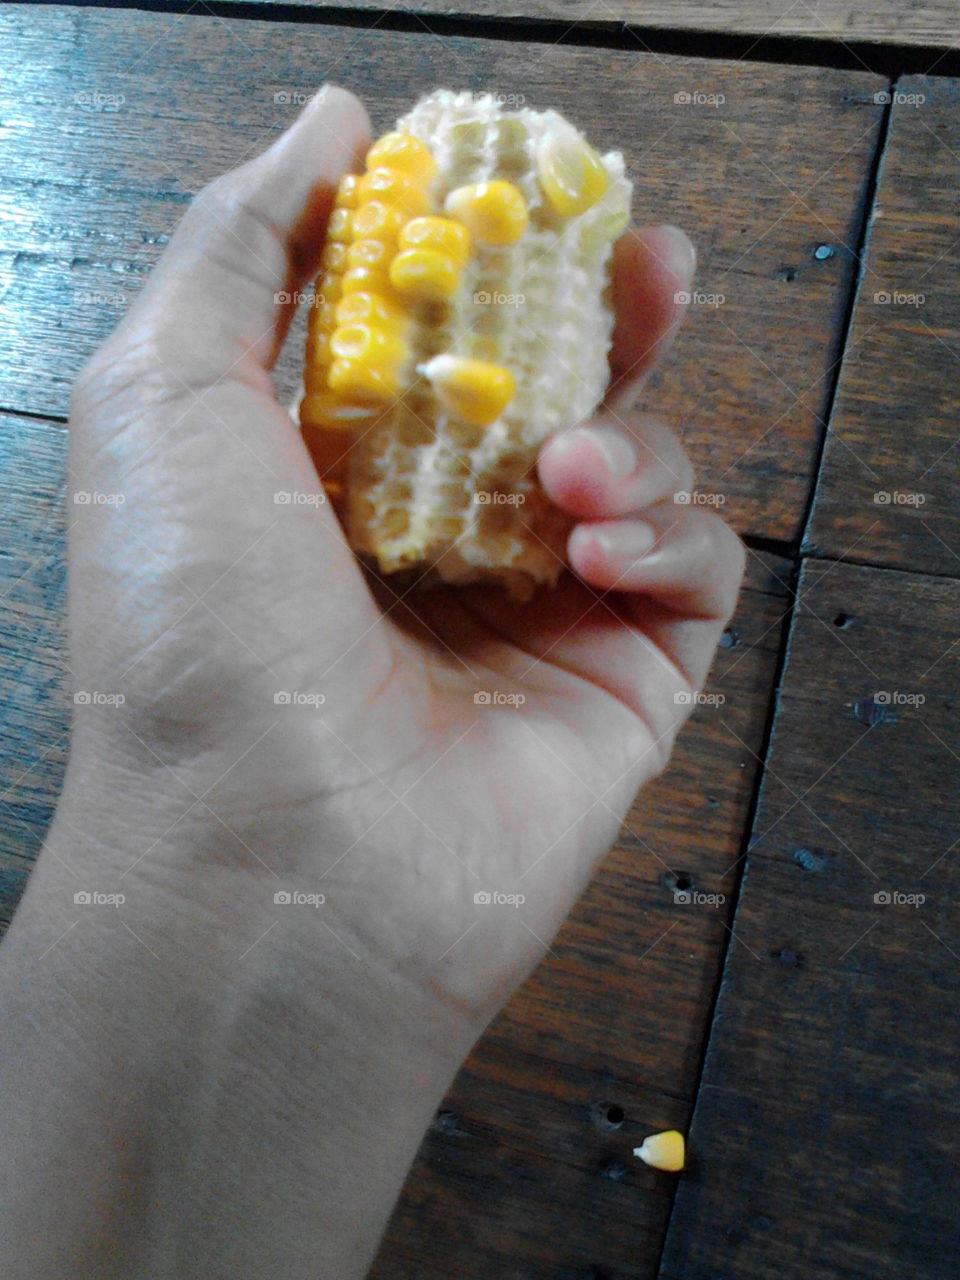 my corn in my hand